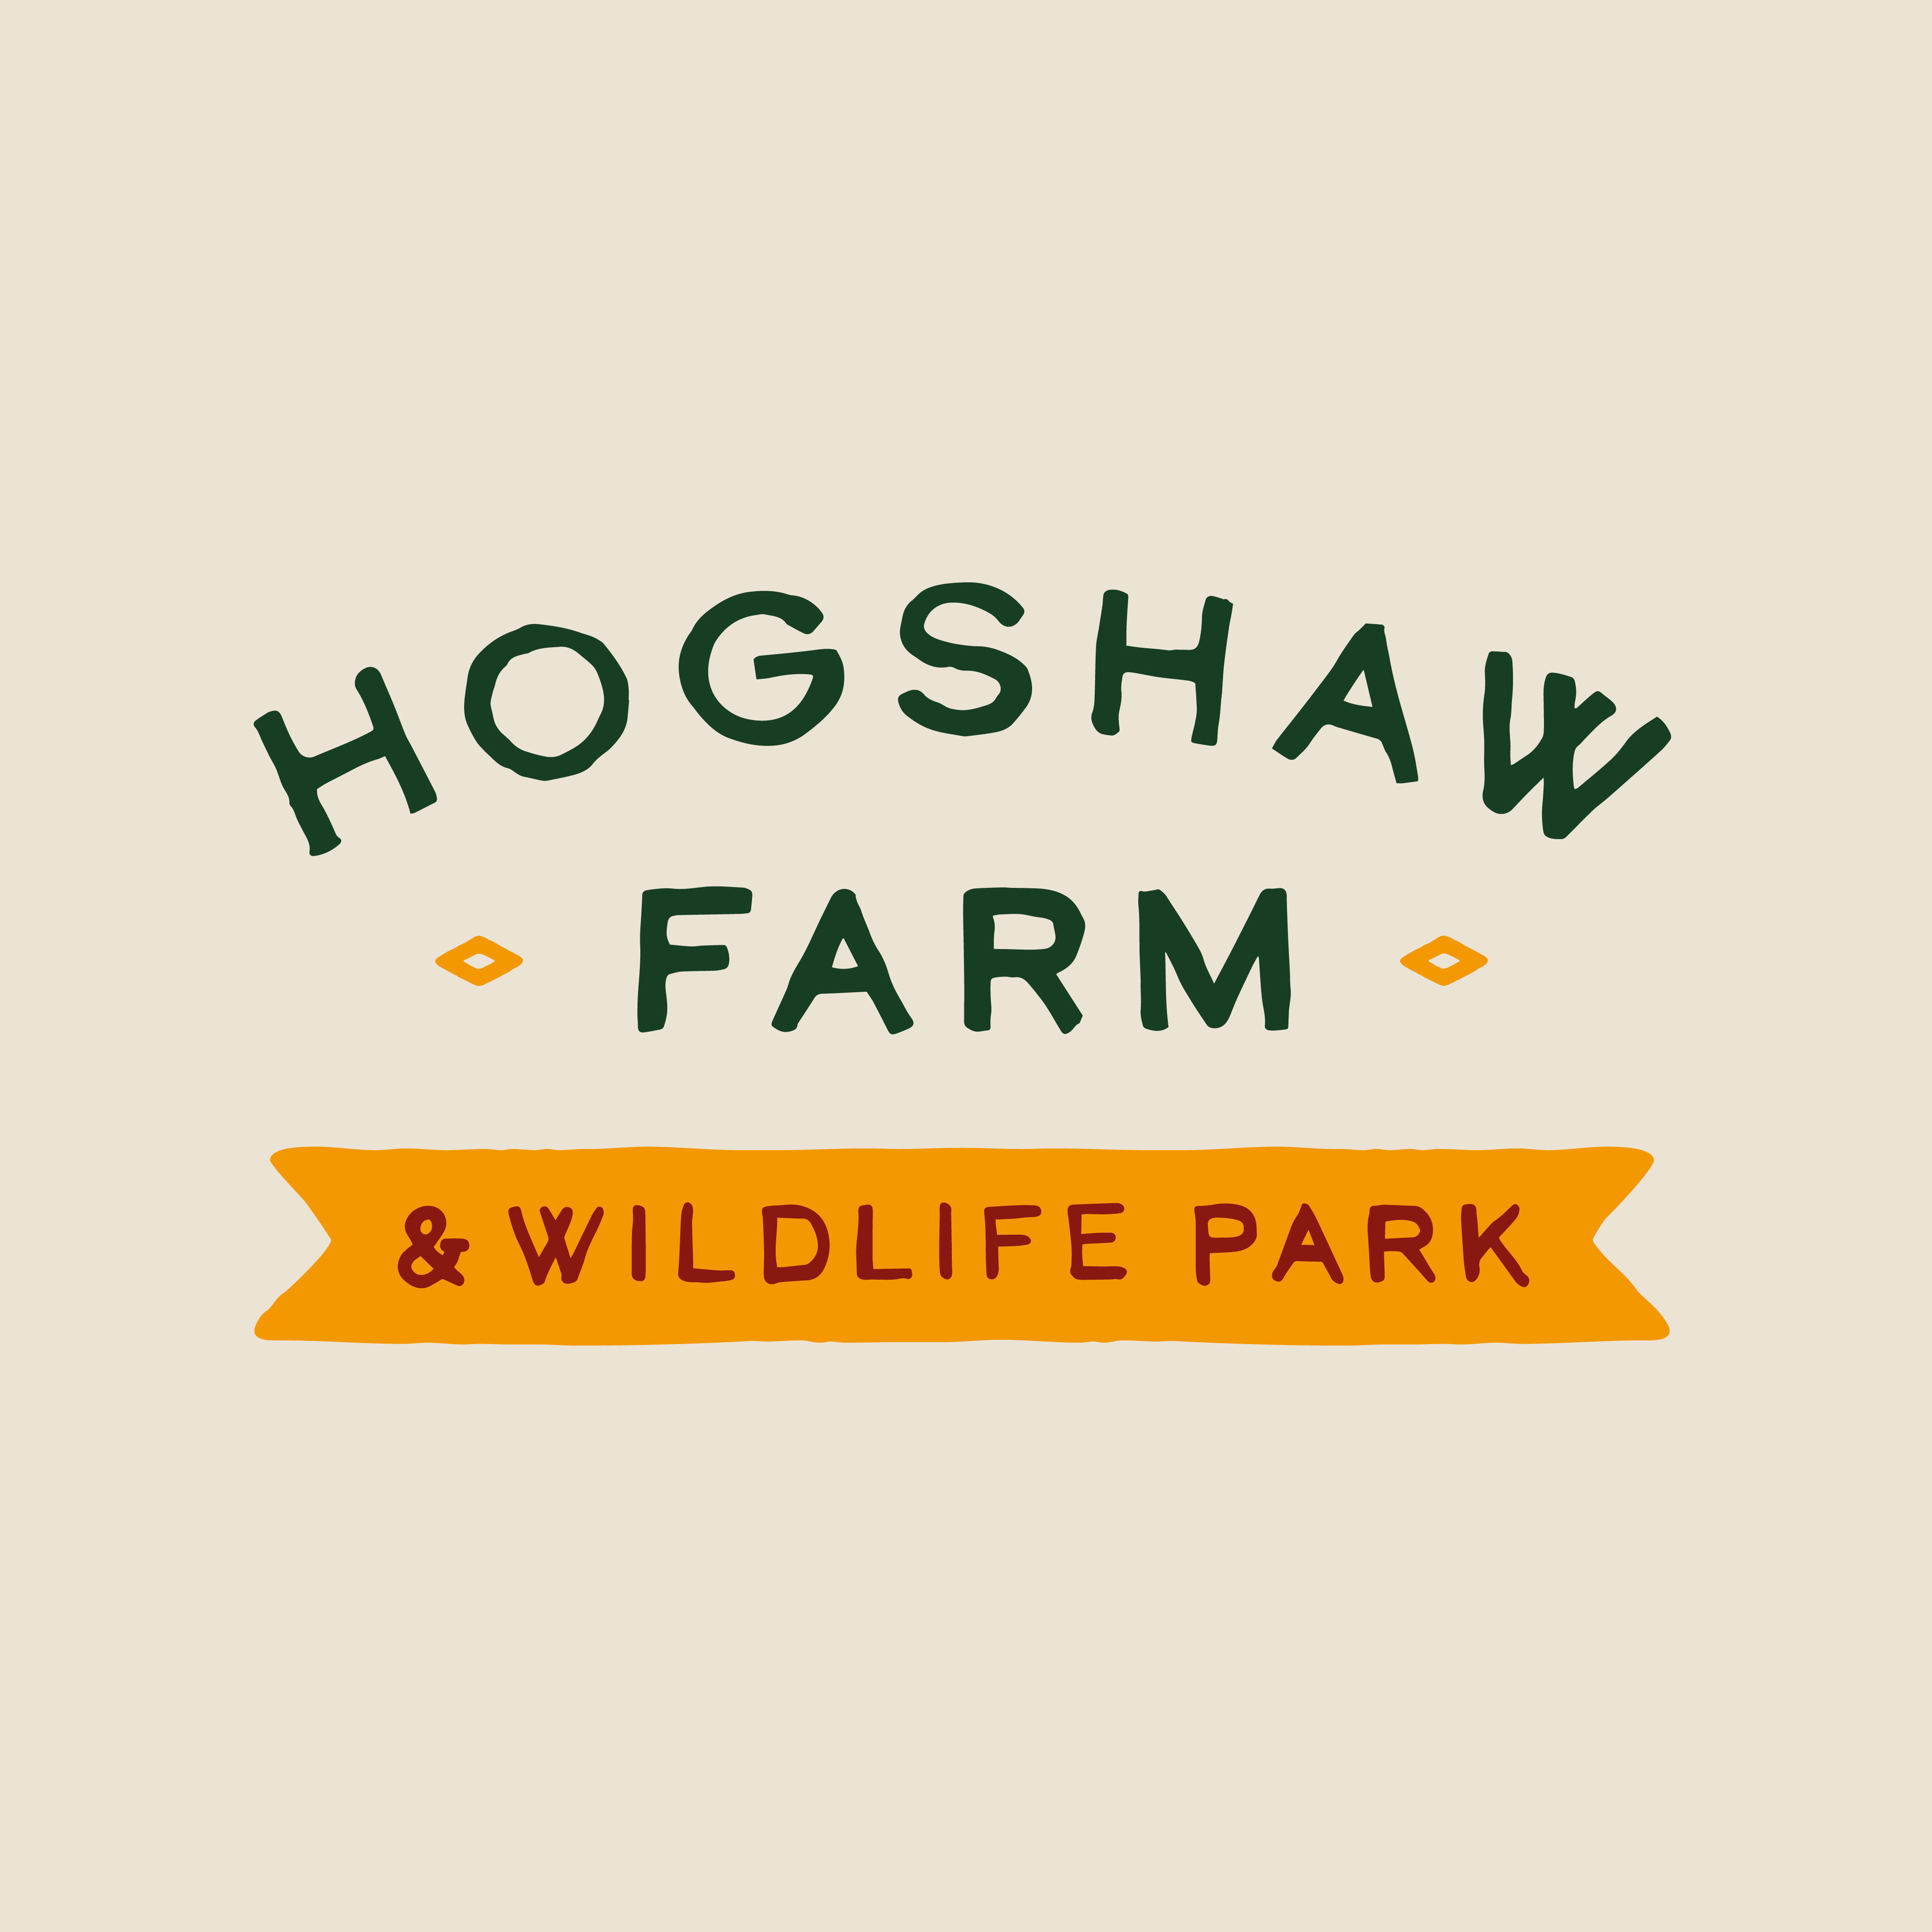 Hogshaw Farm & Wildlife Park's logo